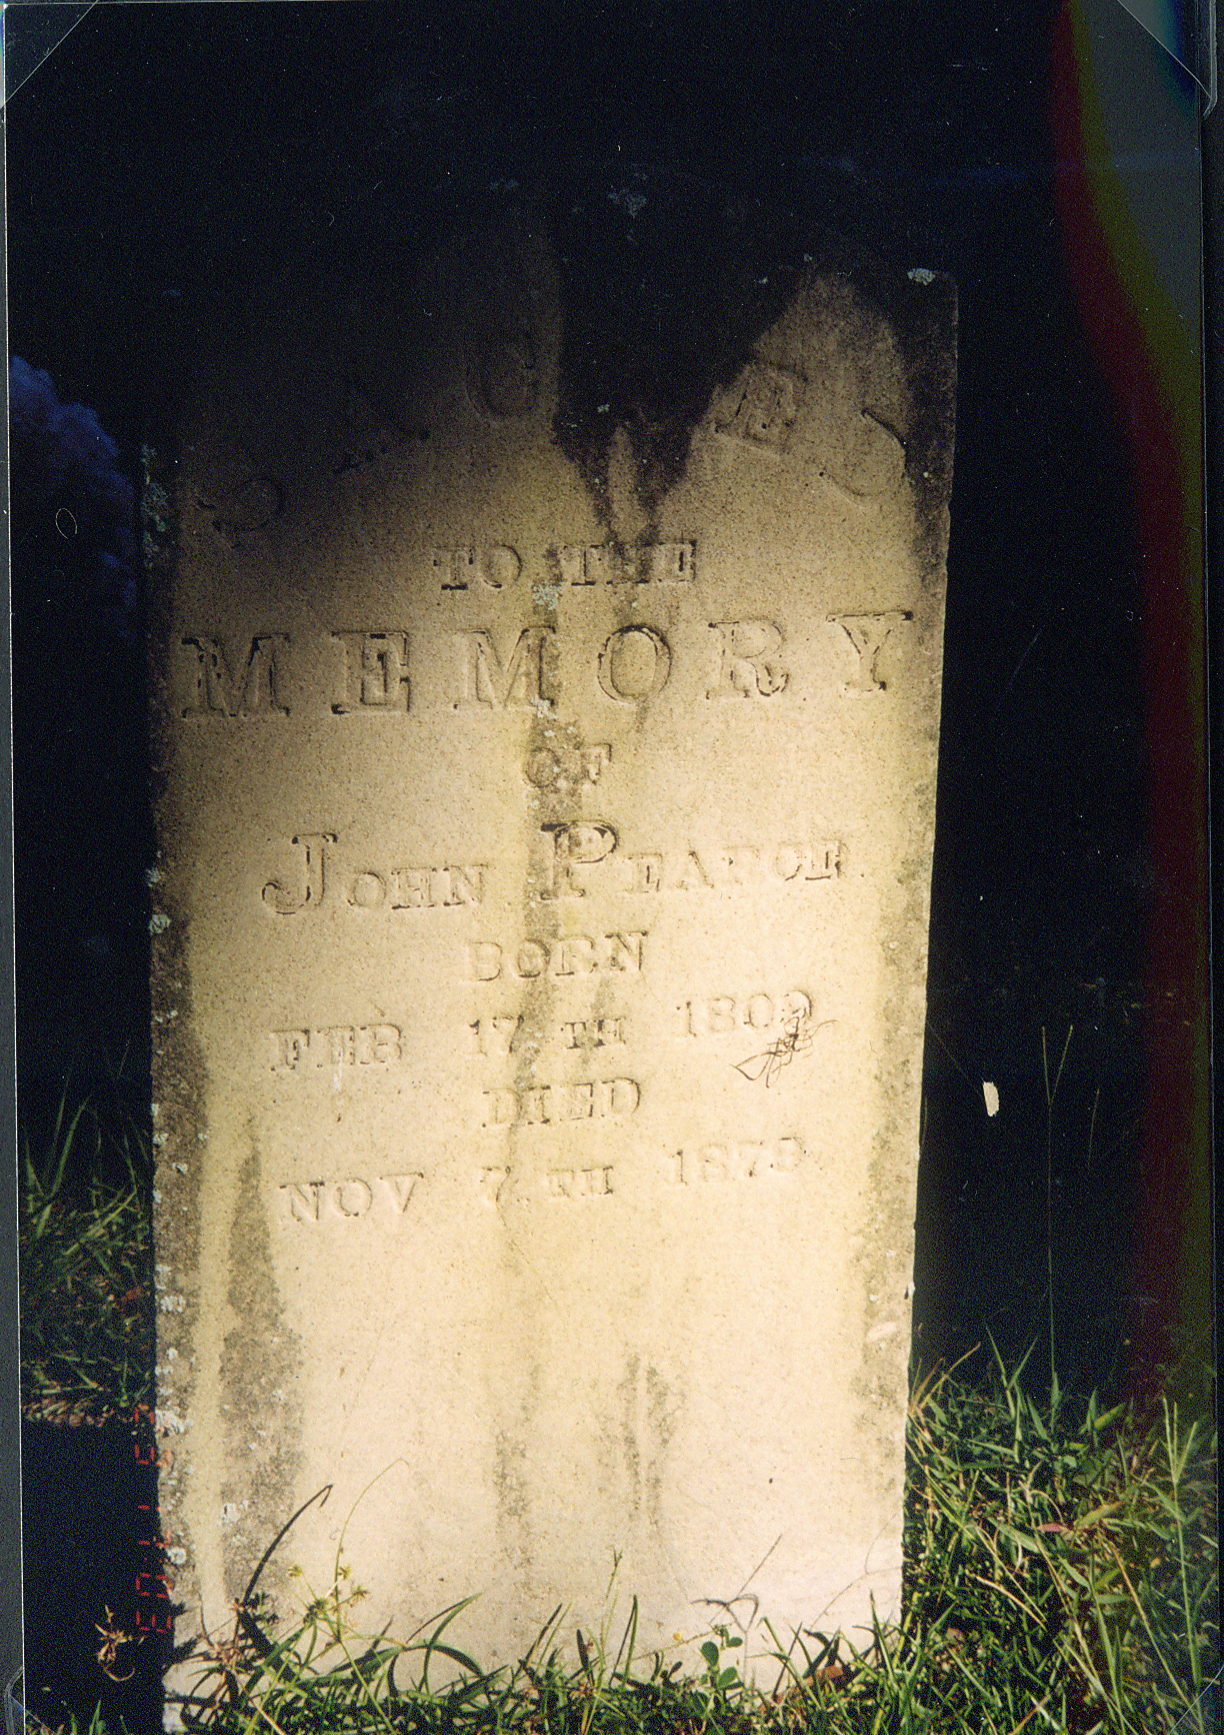 John Pearce Grave